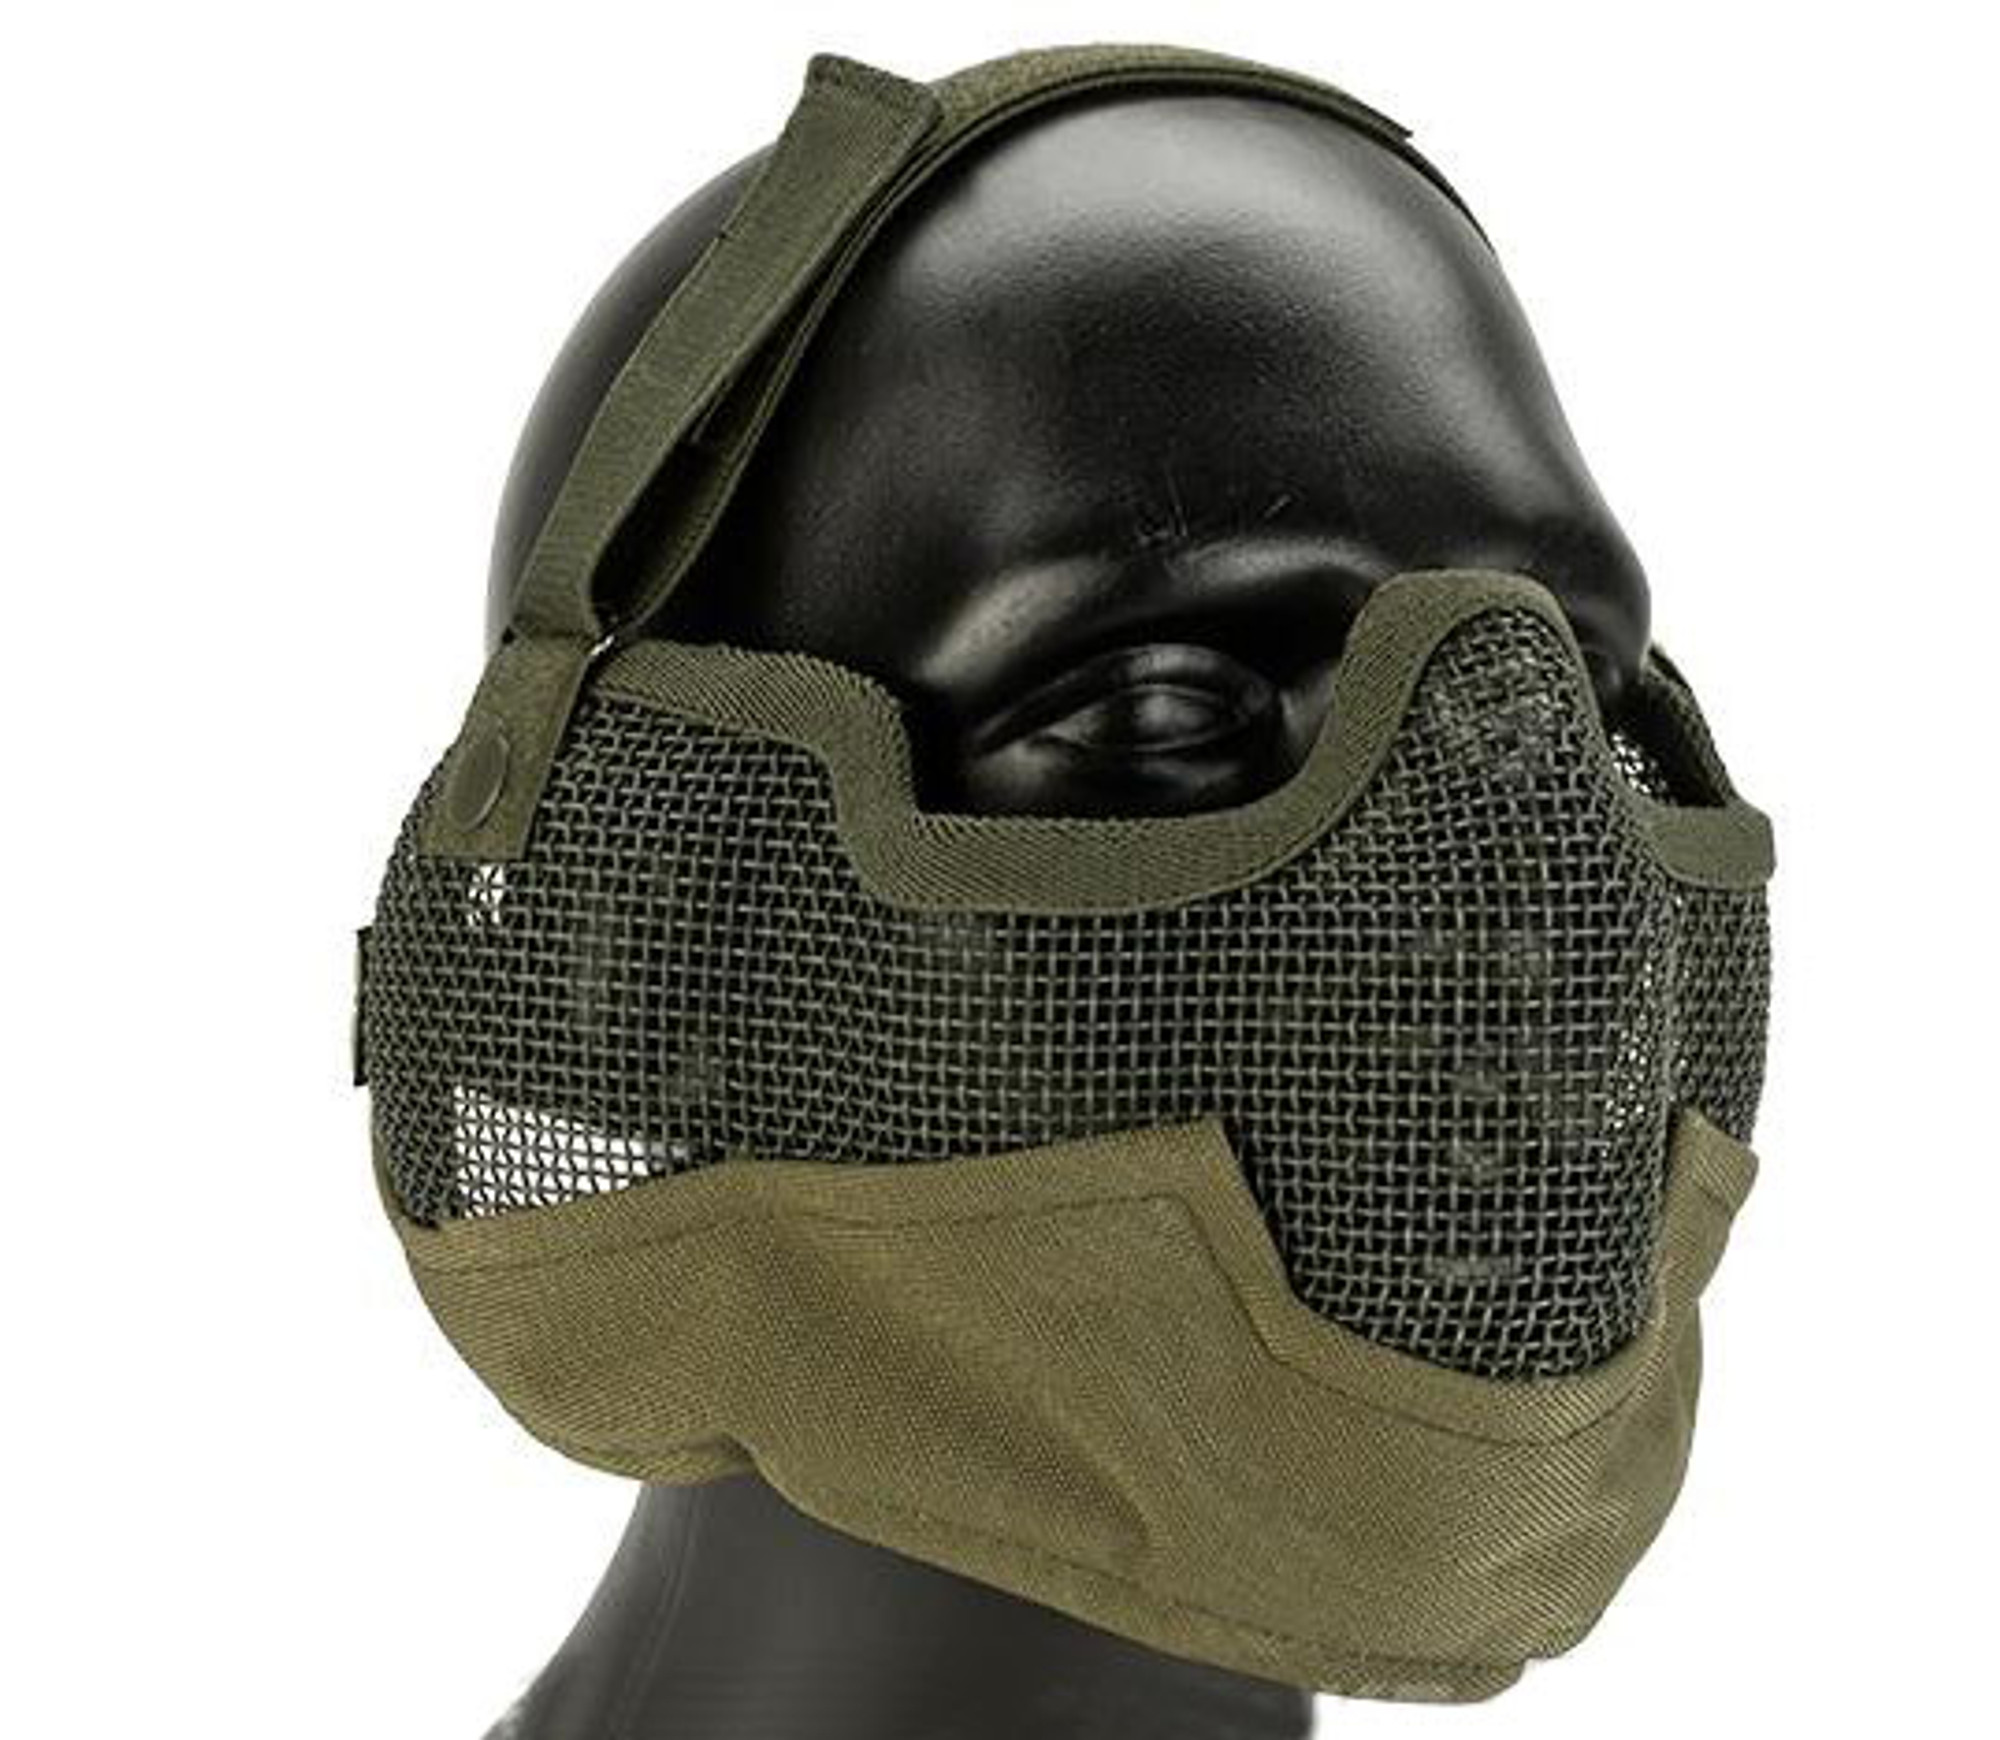 Matrix Iron Face Carbon Steel "Striker" Gen2 Metal Mesh Lower Half Mask - Desert Tan